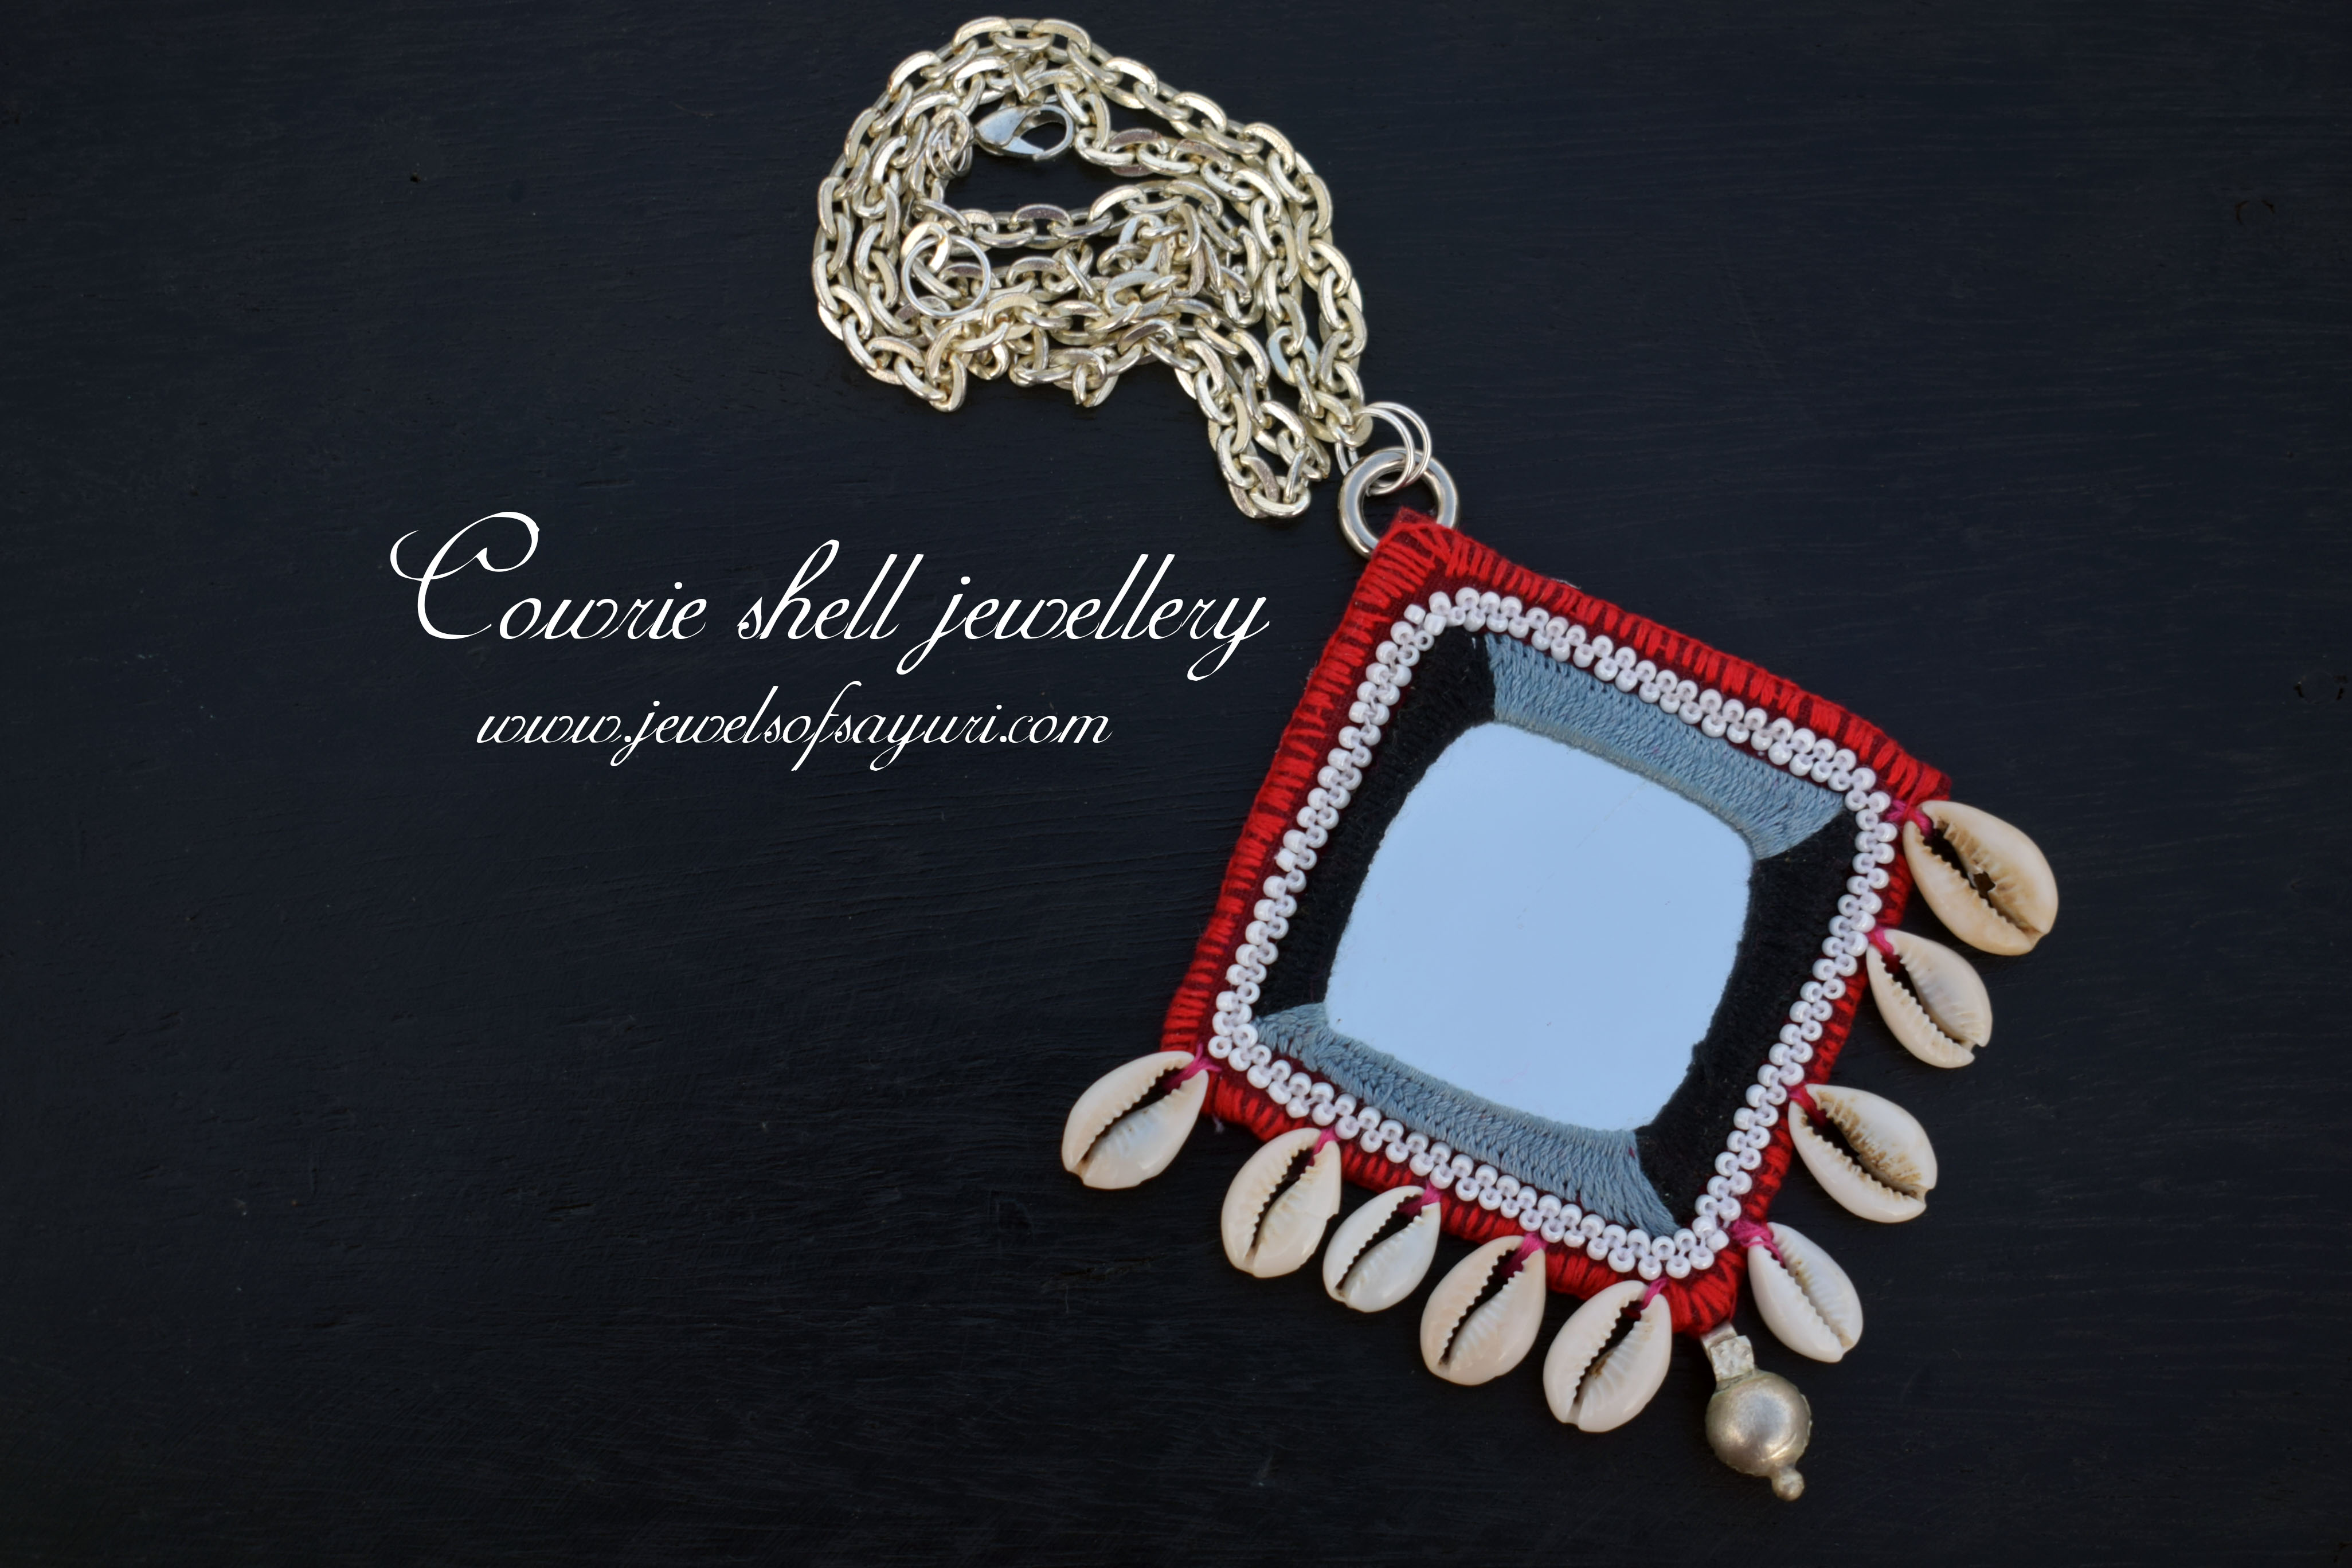 Cowrie shell jewellery